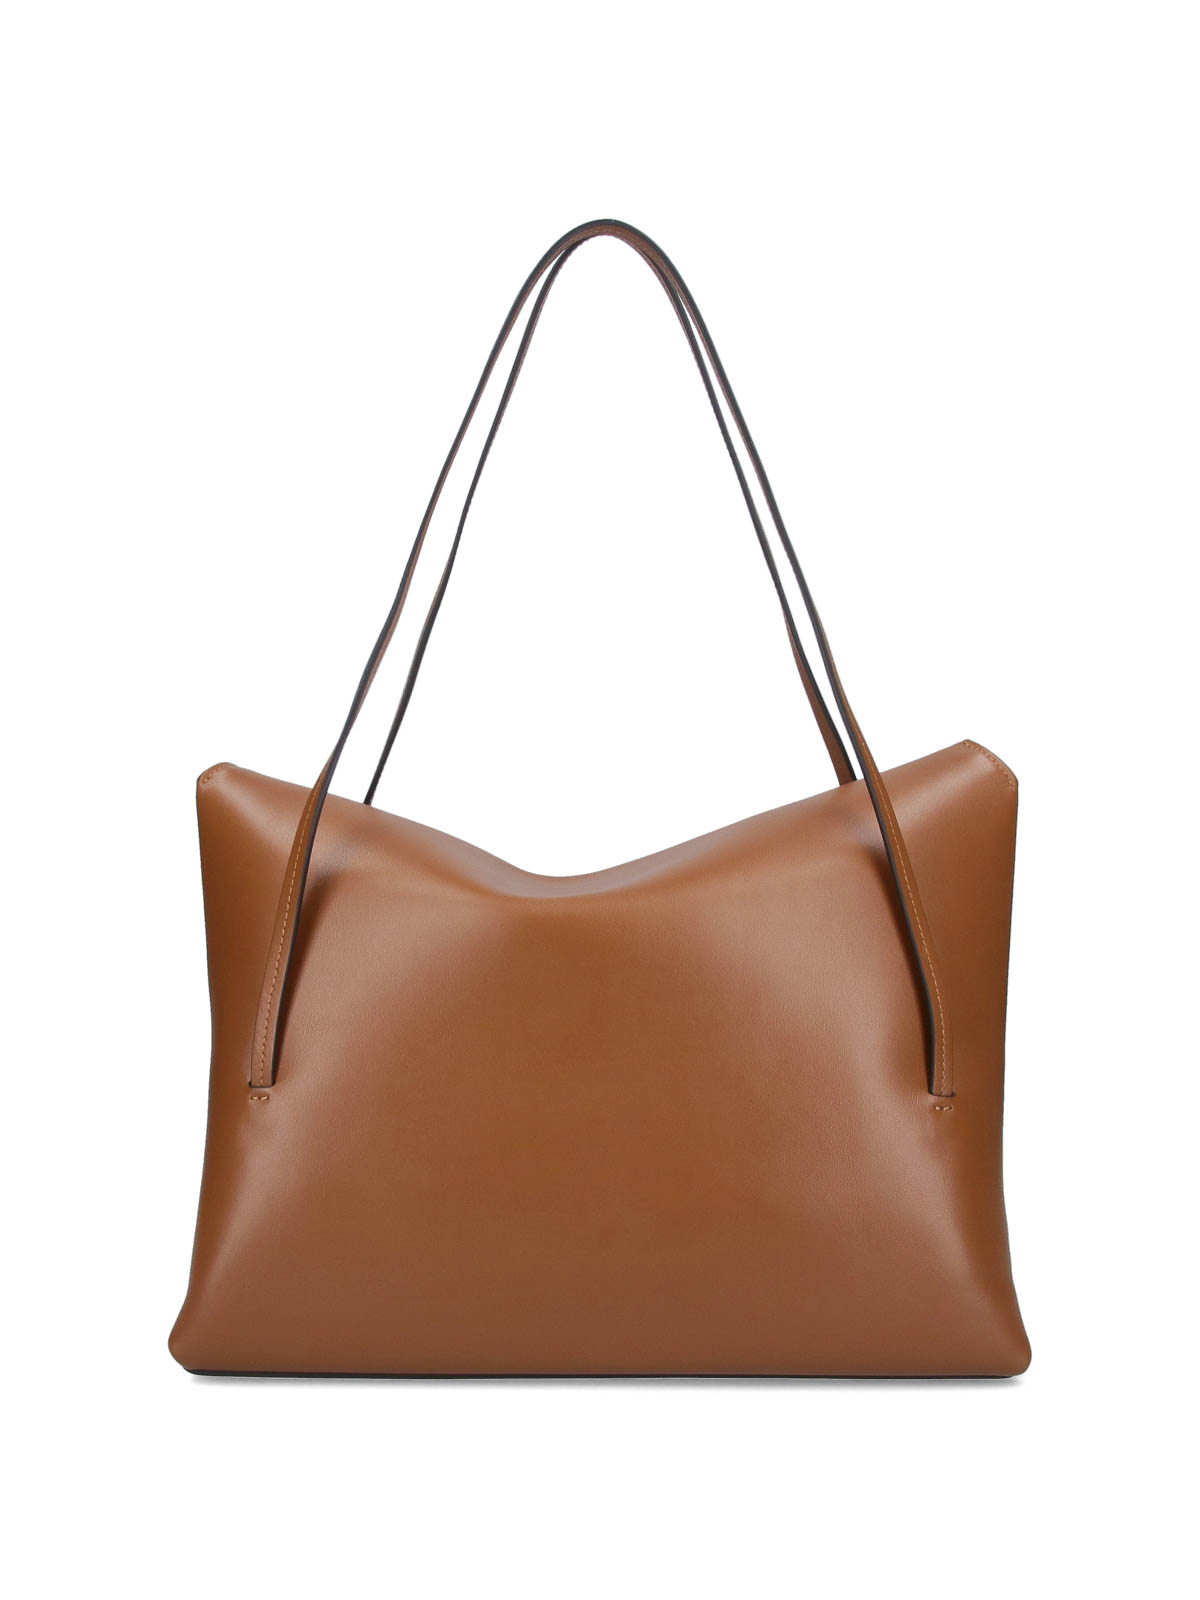 SHEIN Mini Bags Sale 15% Off